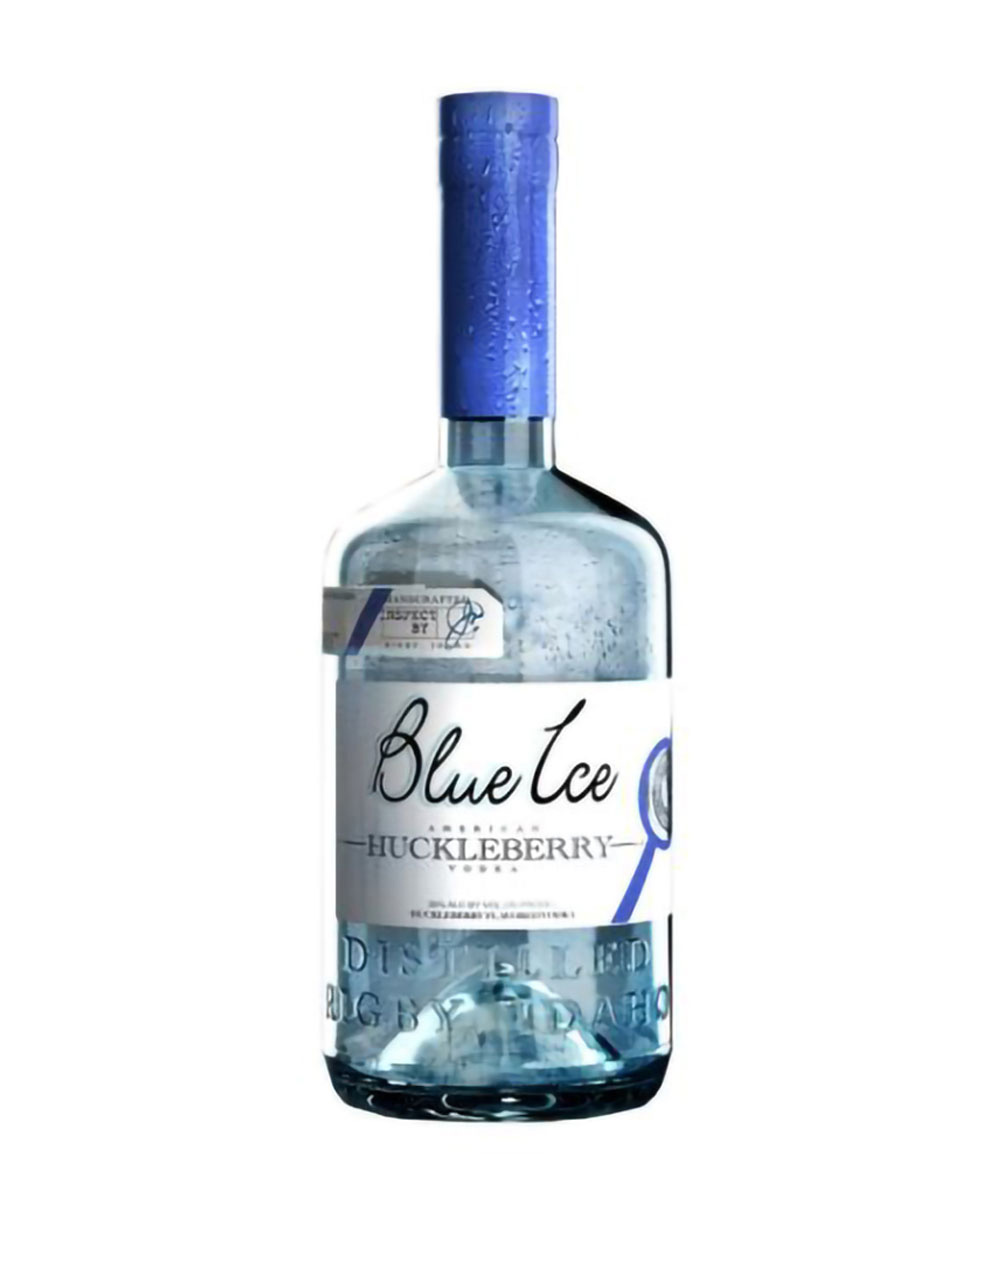 Pinnacle Blueberry Vodka